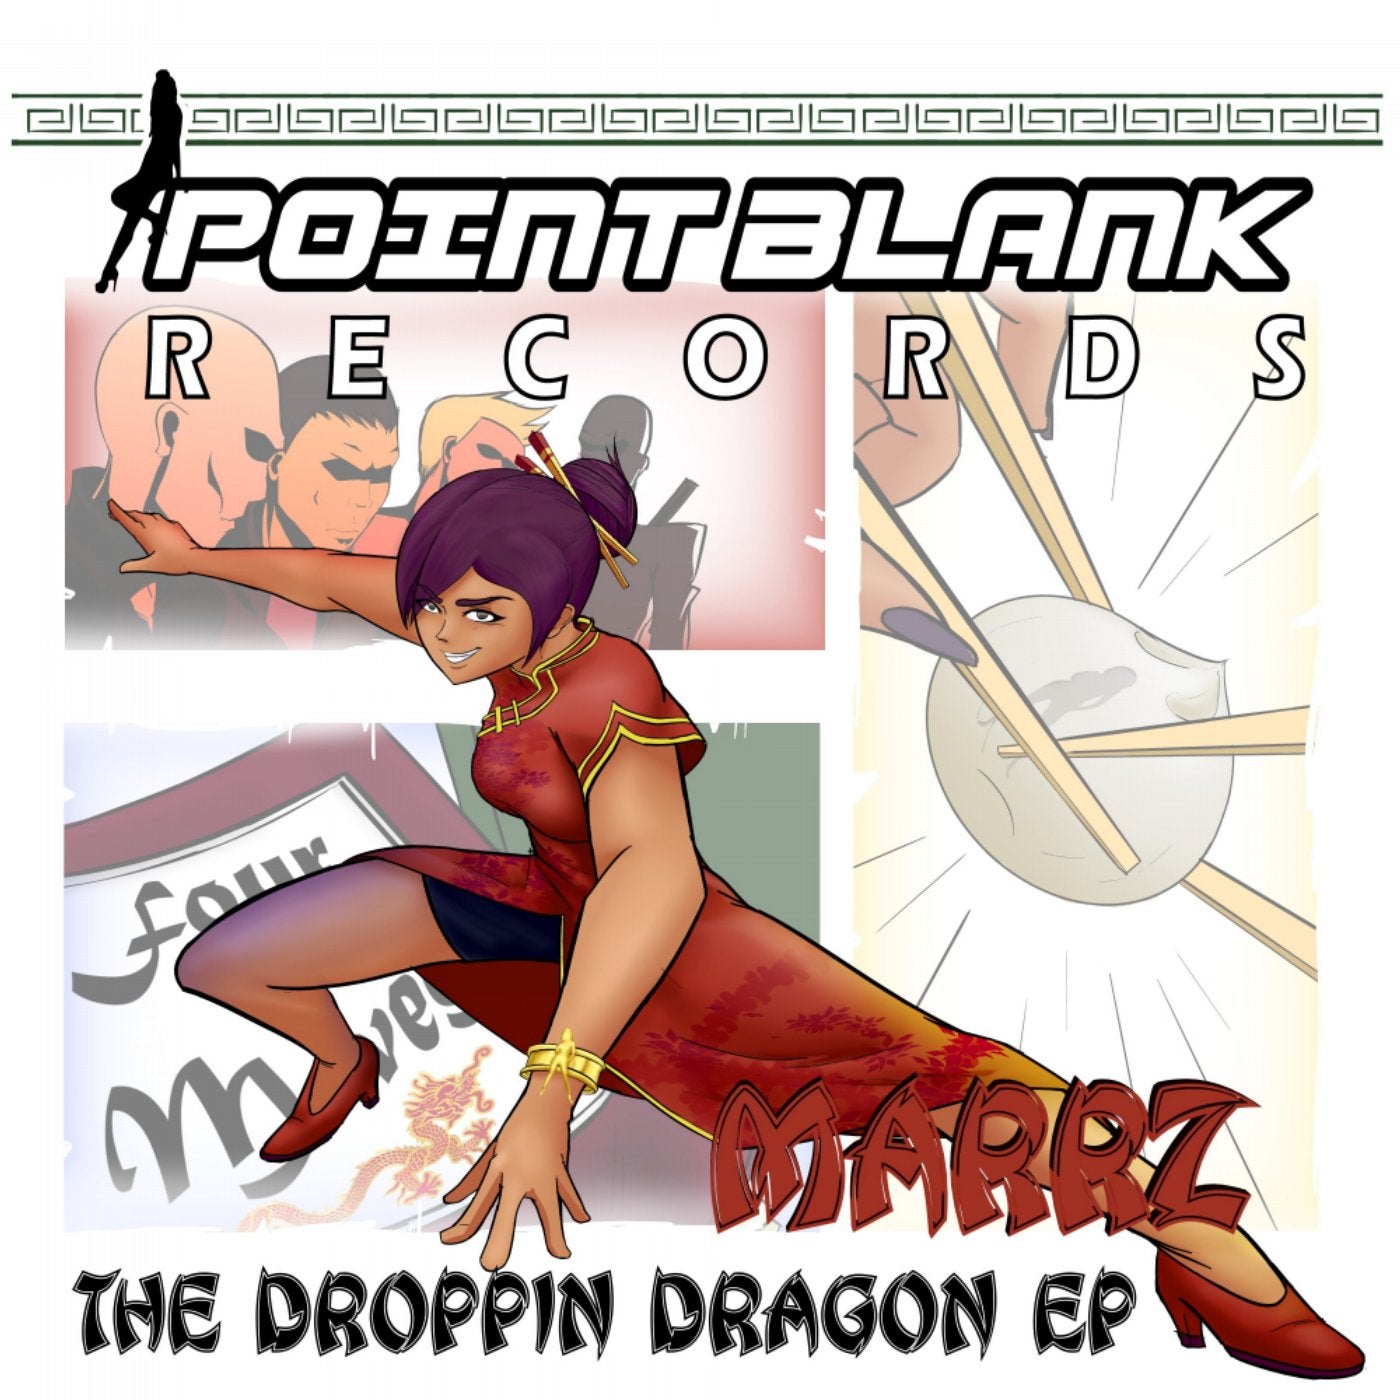 The Droppin Dragon EP